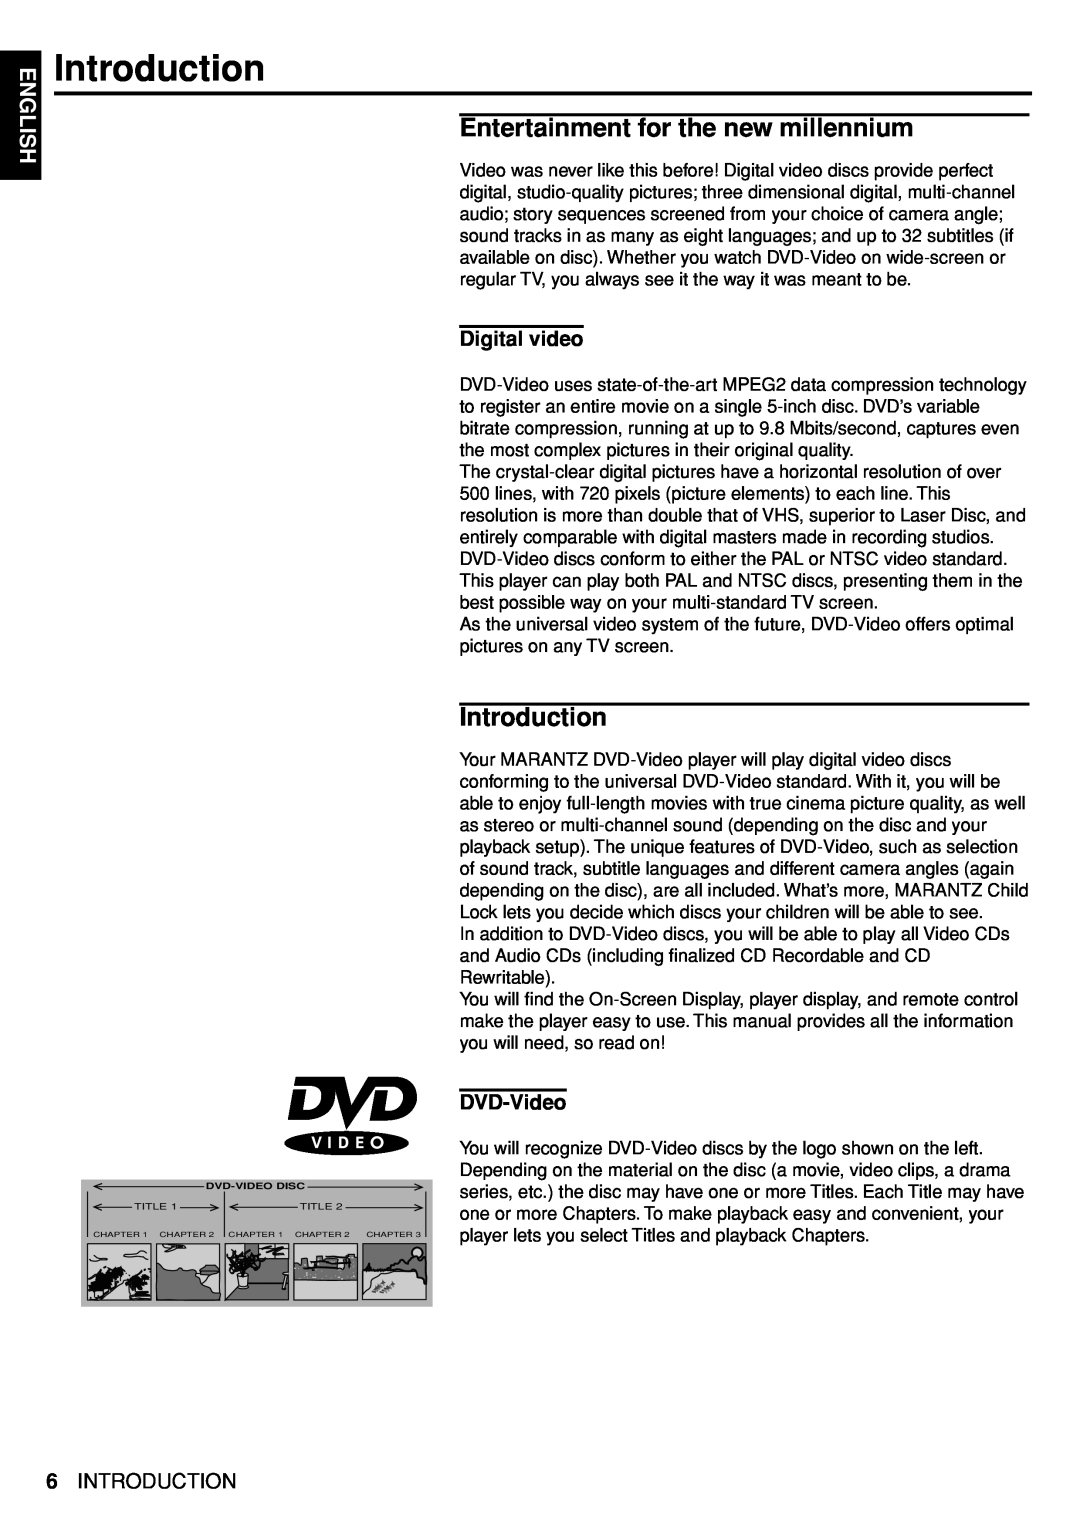 Marantz DV4100 manual Introduction, Entertainment for the new millennium, Digital video, DVD-Video, English 